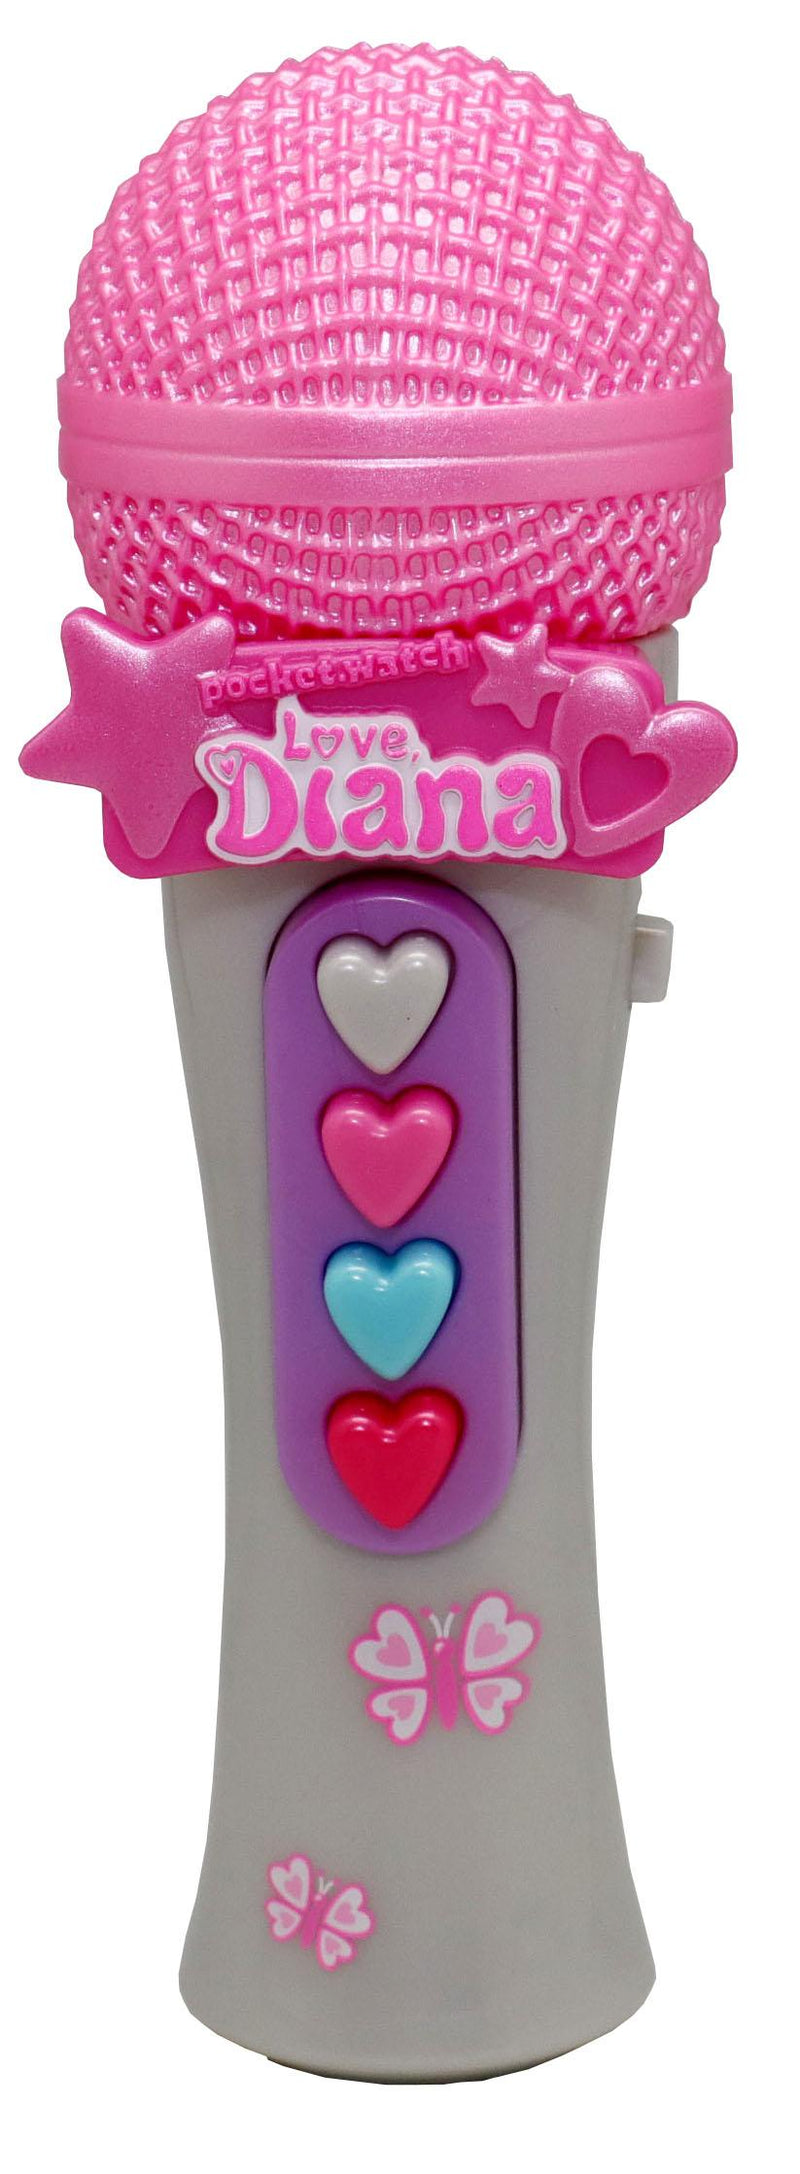 Love Diana S2 33cm Sing Along Diana - Lighter